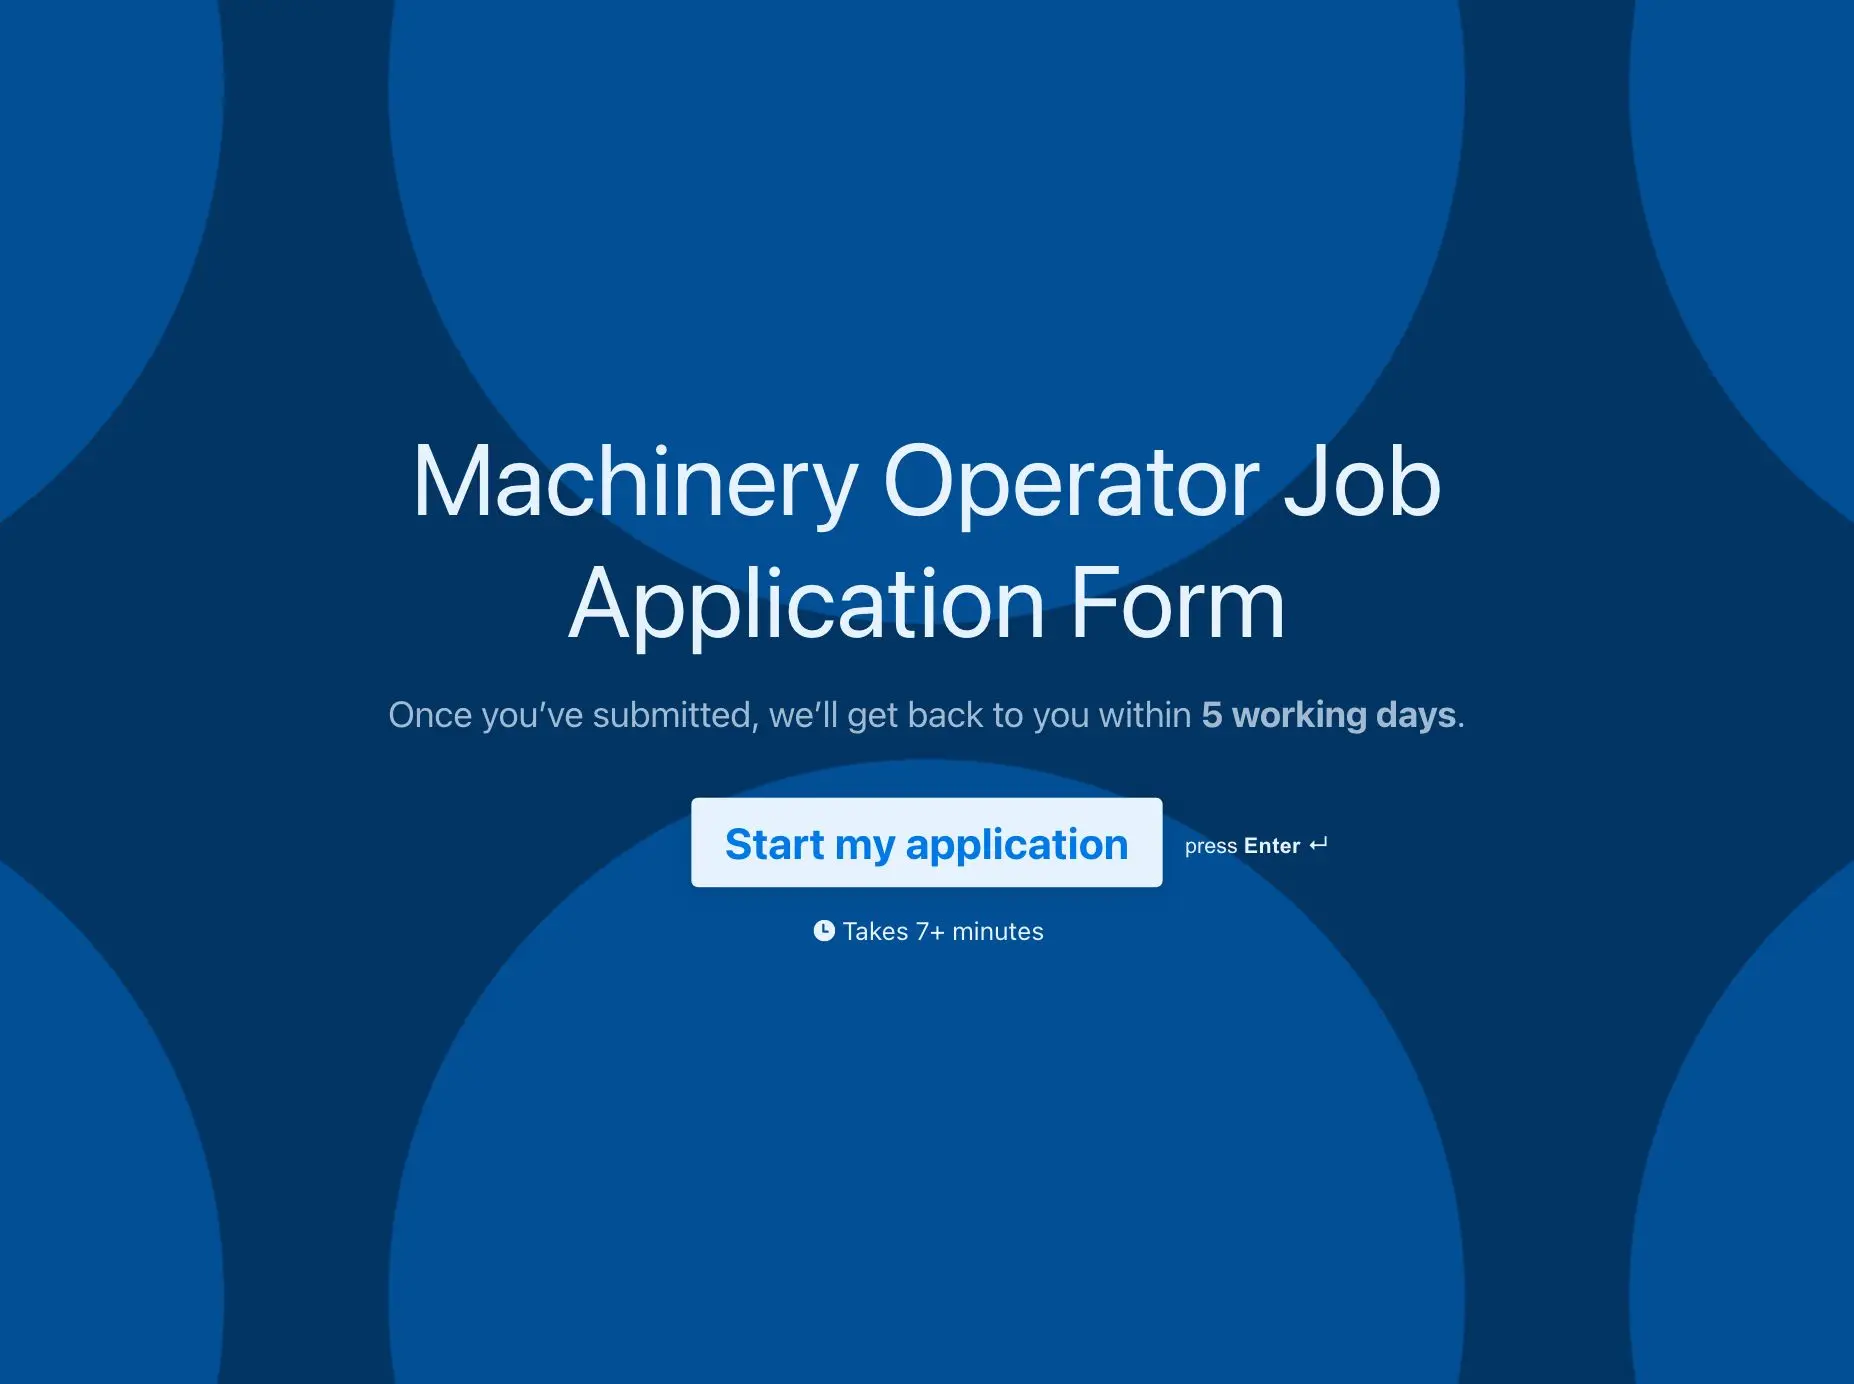 Machinery Operator Job Application Form Template Hero